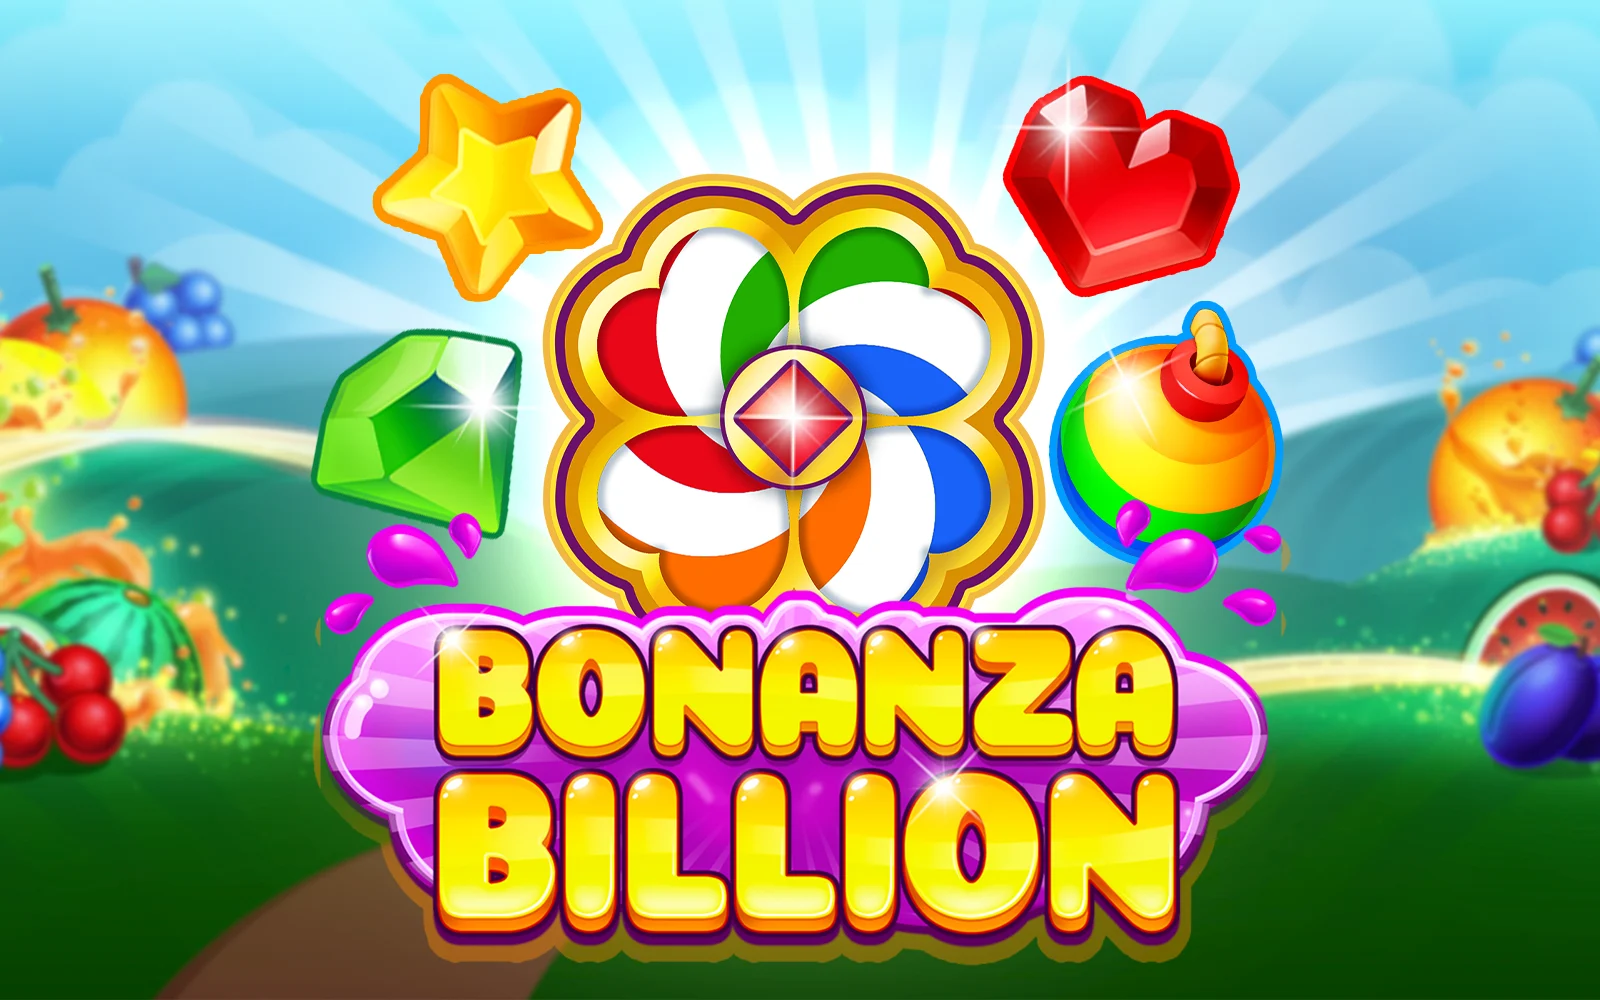 Play Bonanza Billion on Starcasino.be online casino